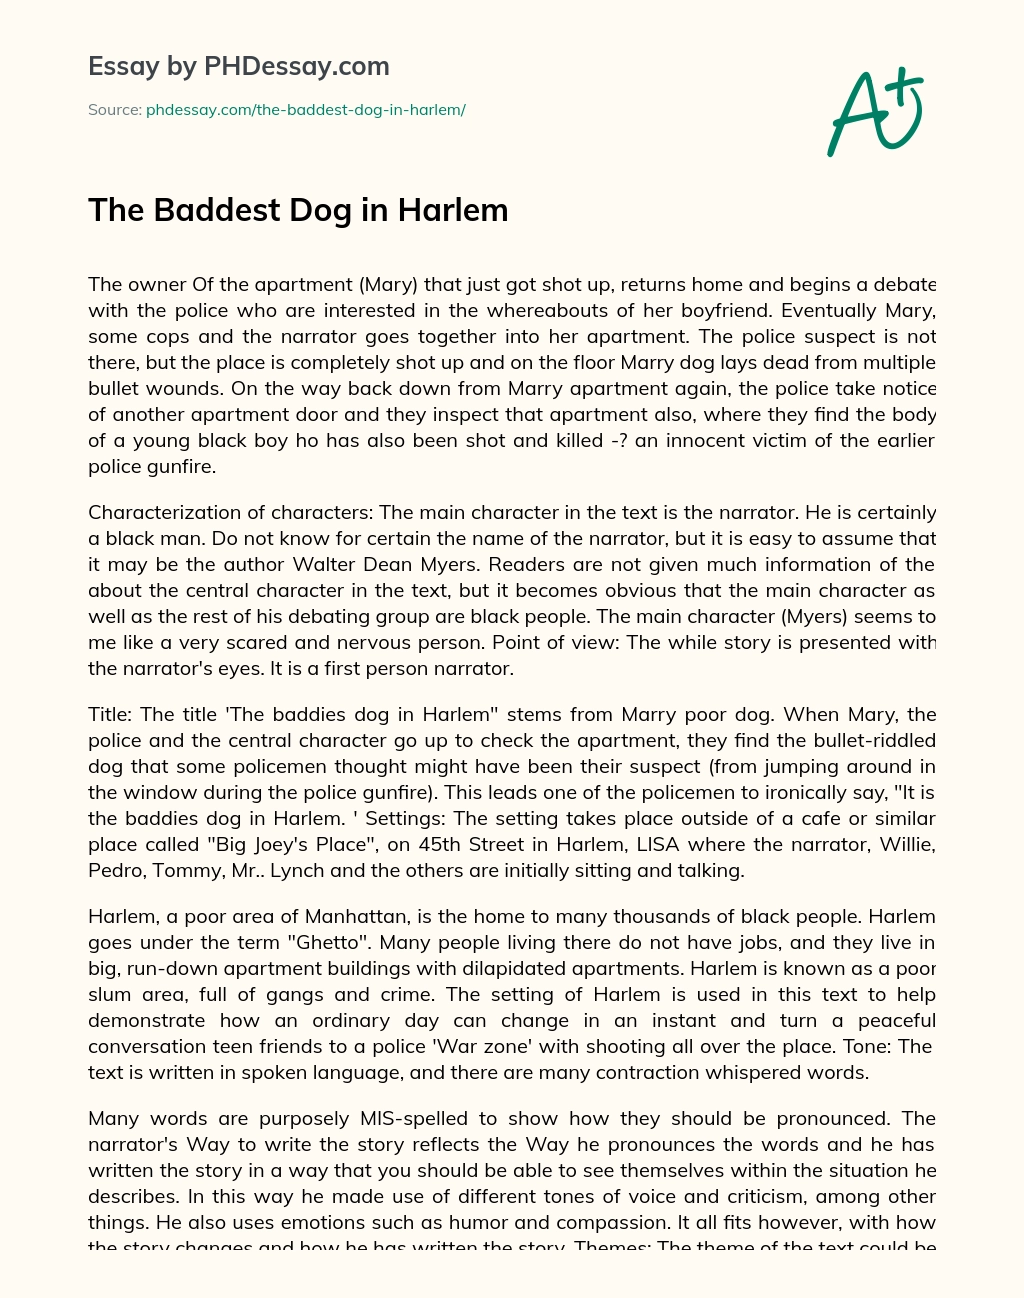 The Baddest Dog in Harlem essay